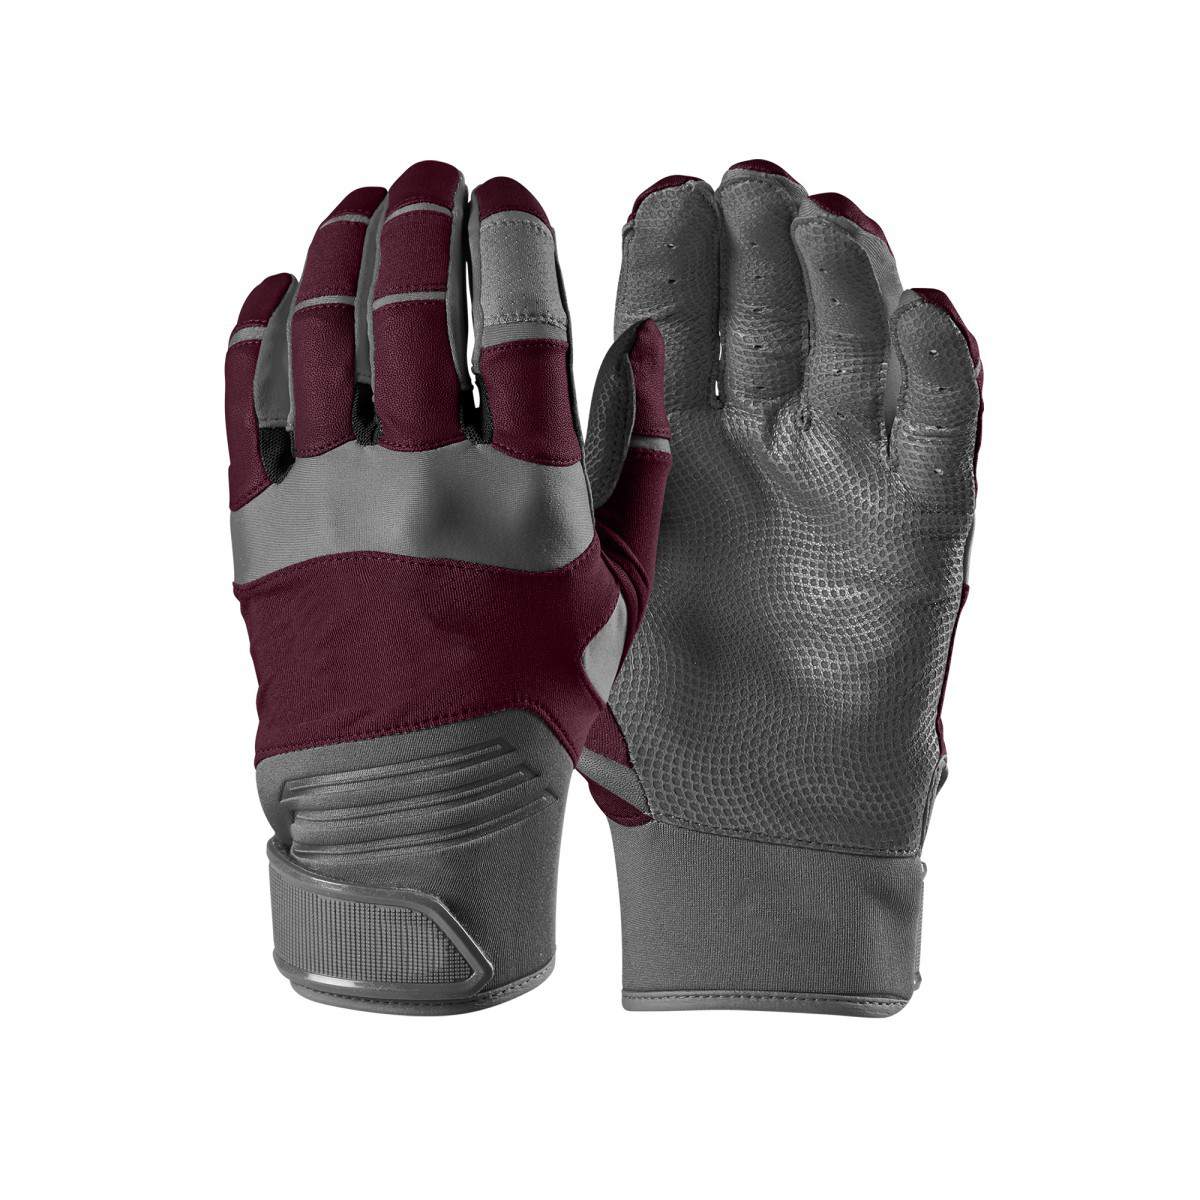 Genuine digital stripe sheepskin leather flexible form-fitting batting gloves